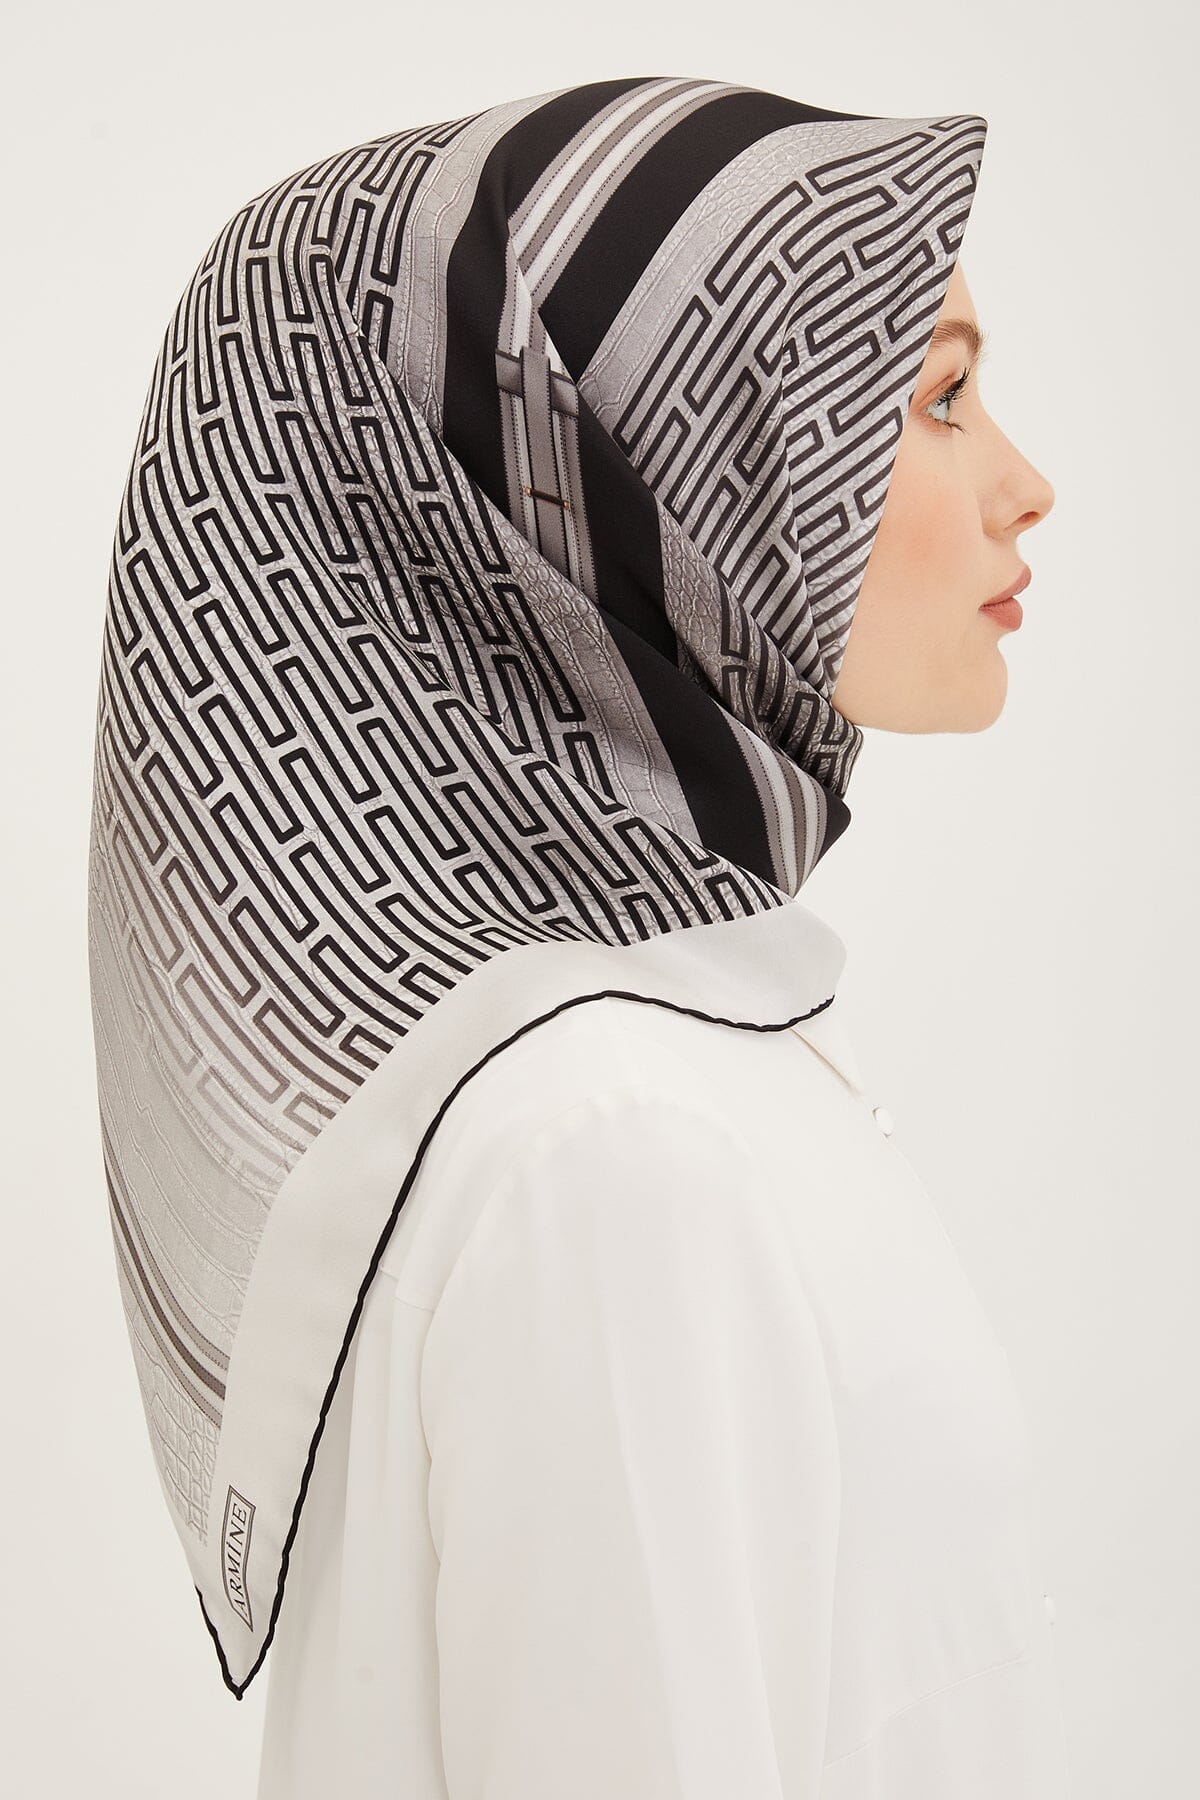 Armine Subway Square Silk Scarf #3 Silk Hijabs,Armine Armine 